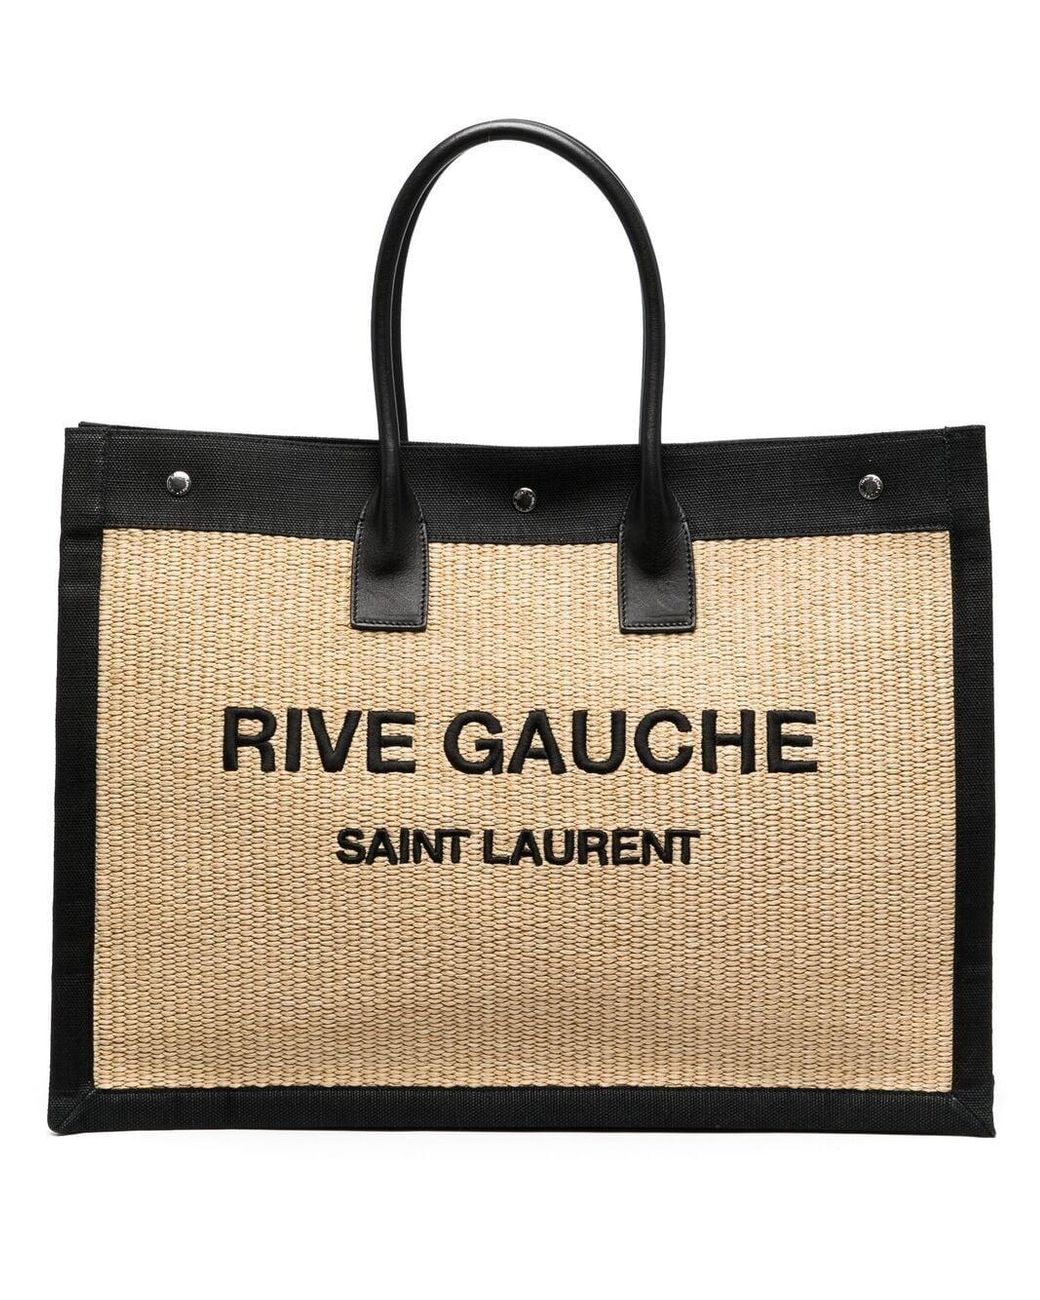 Saint Laurent Rive Gauche Straw Tote Bag in Black